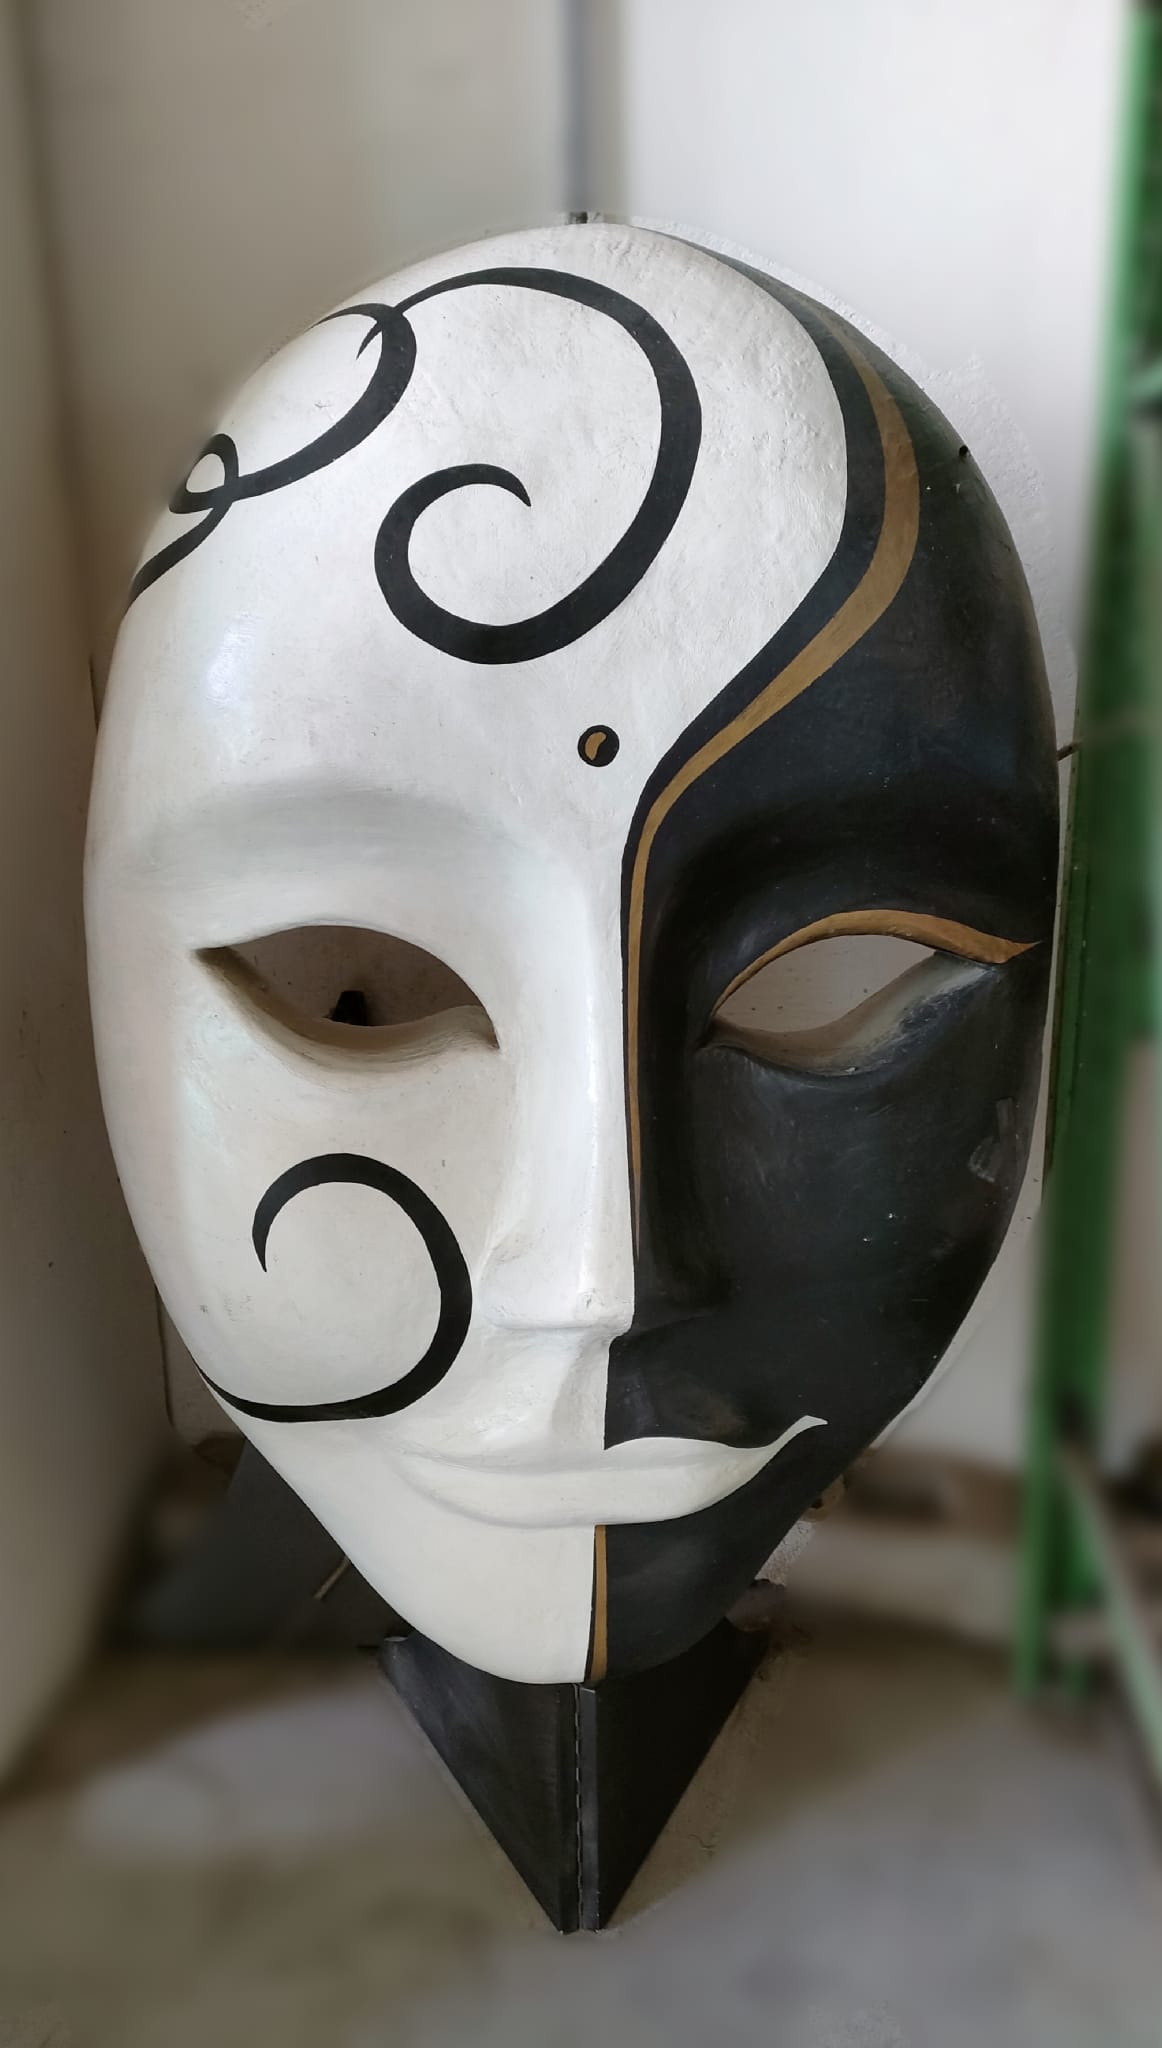  OMAS "Carnival emotions" exhibition mask